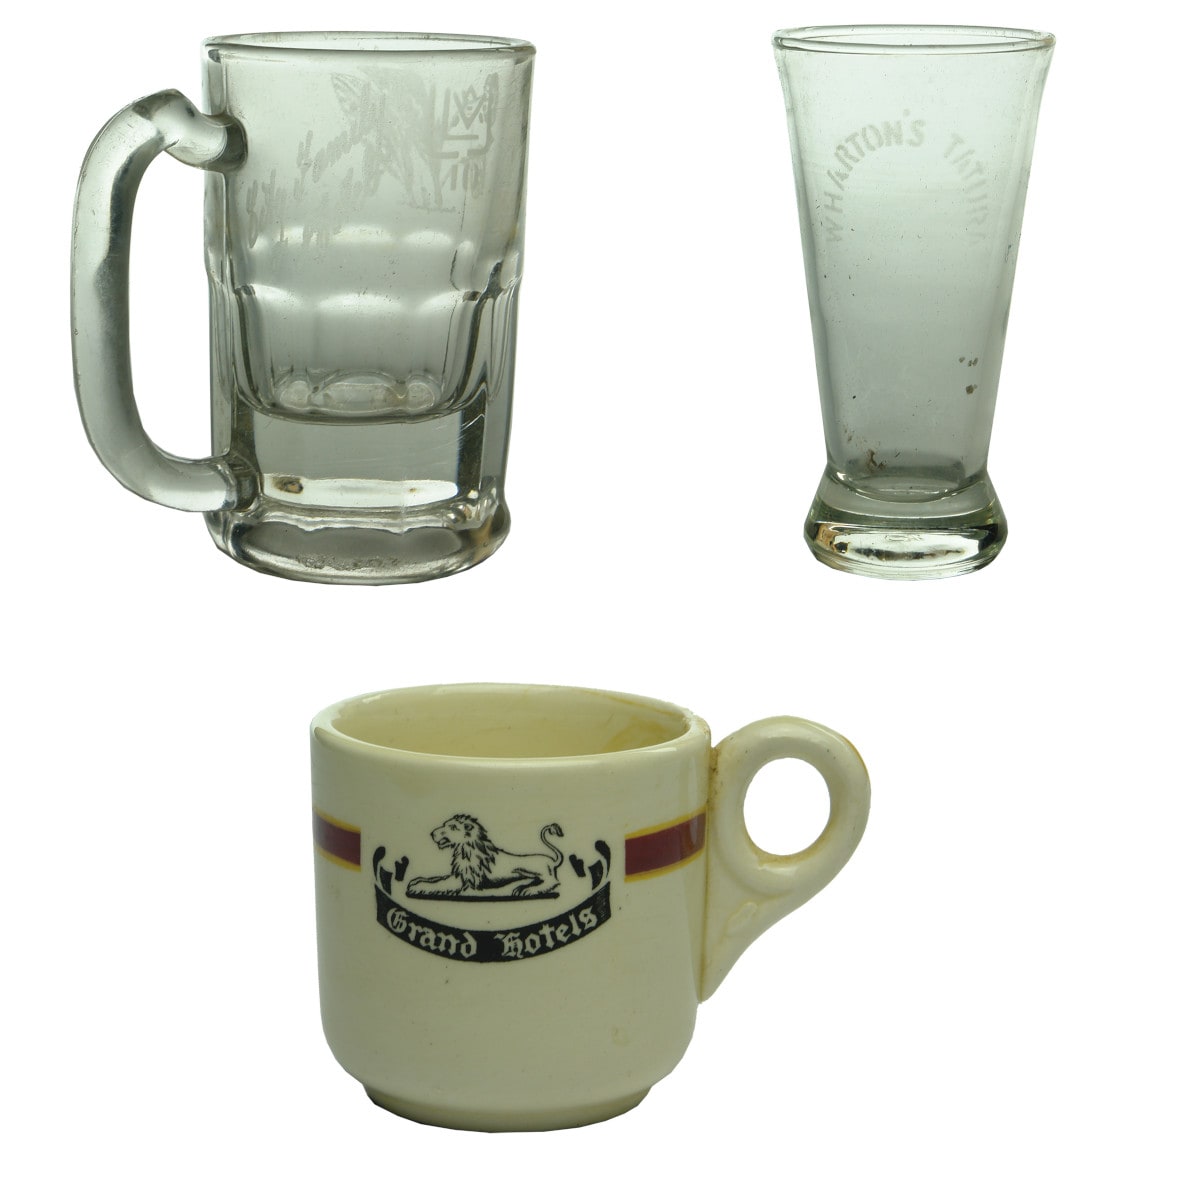 3 Hotel Items: City Family Hotel (Bendigo) Beer Mug; Wharton's Tatura beer glass; Grand Hotels cup.